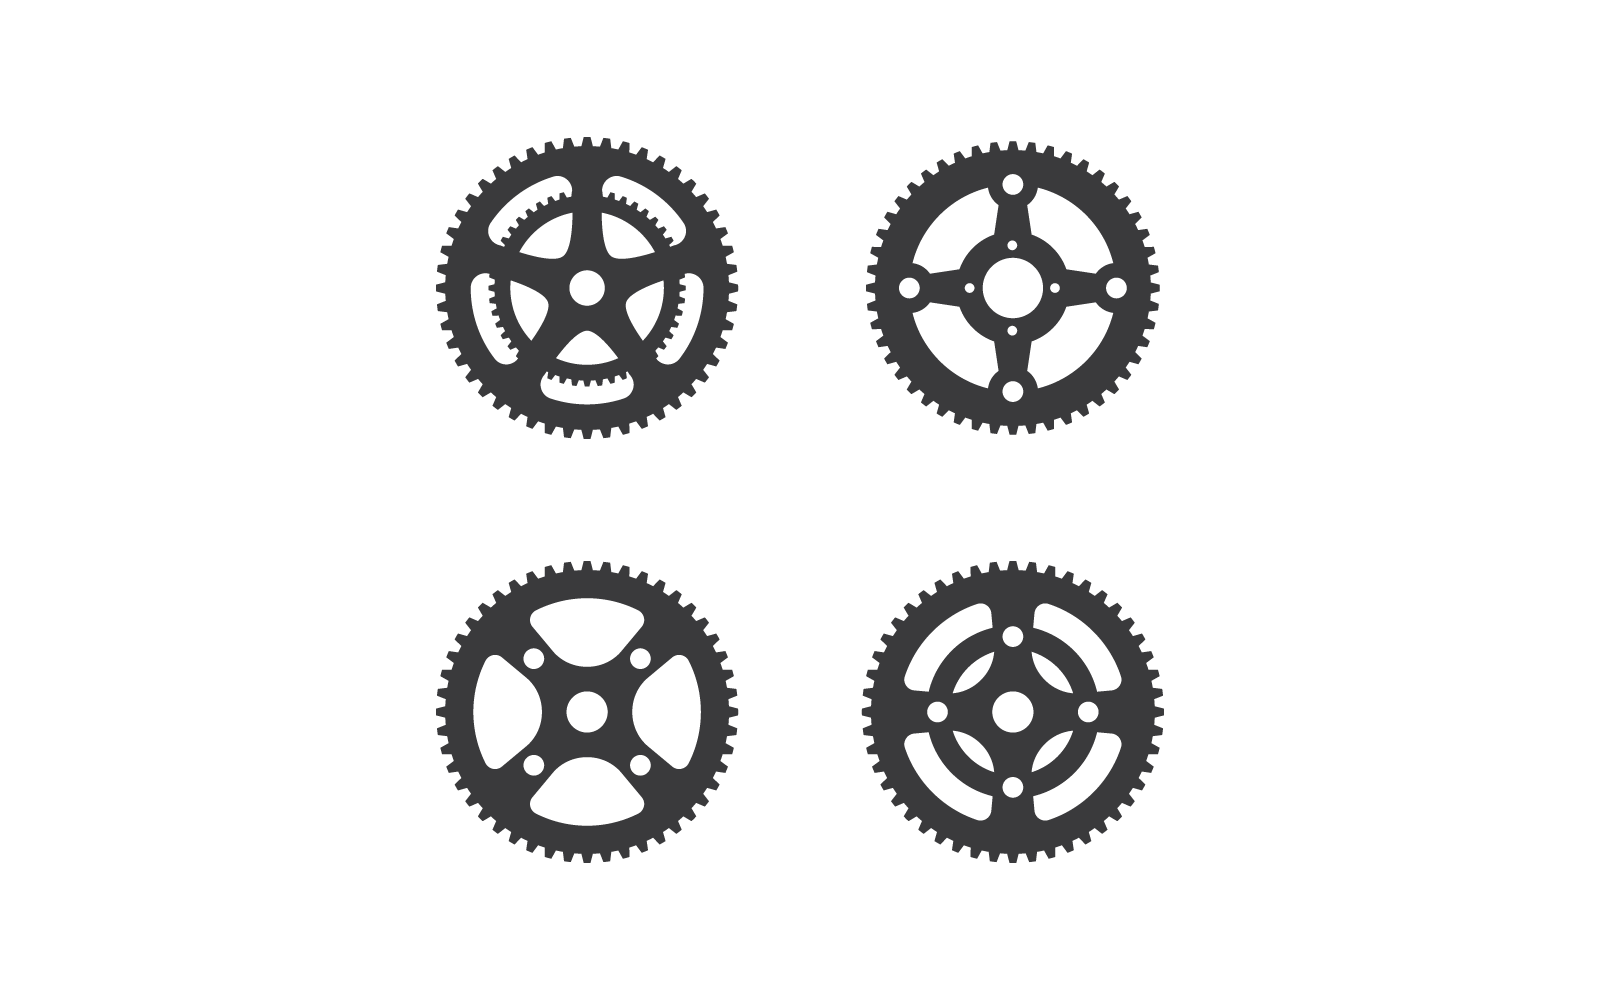 Bicycle cogwheel illustration design